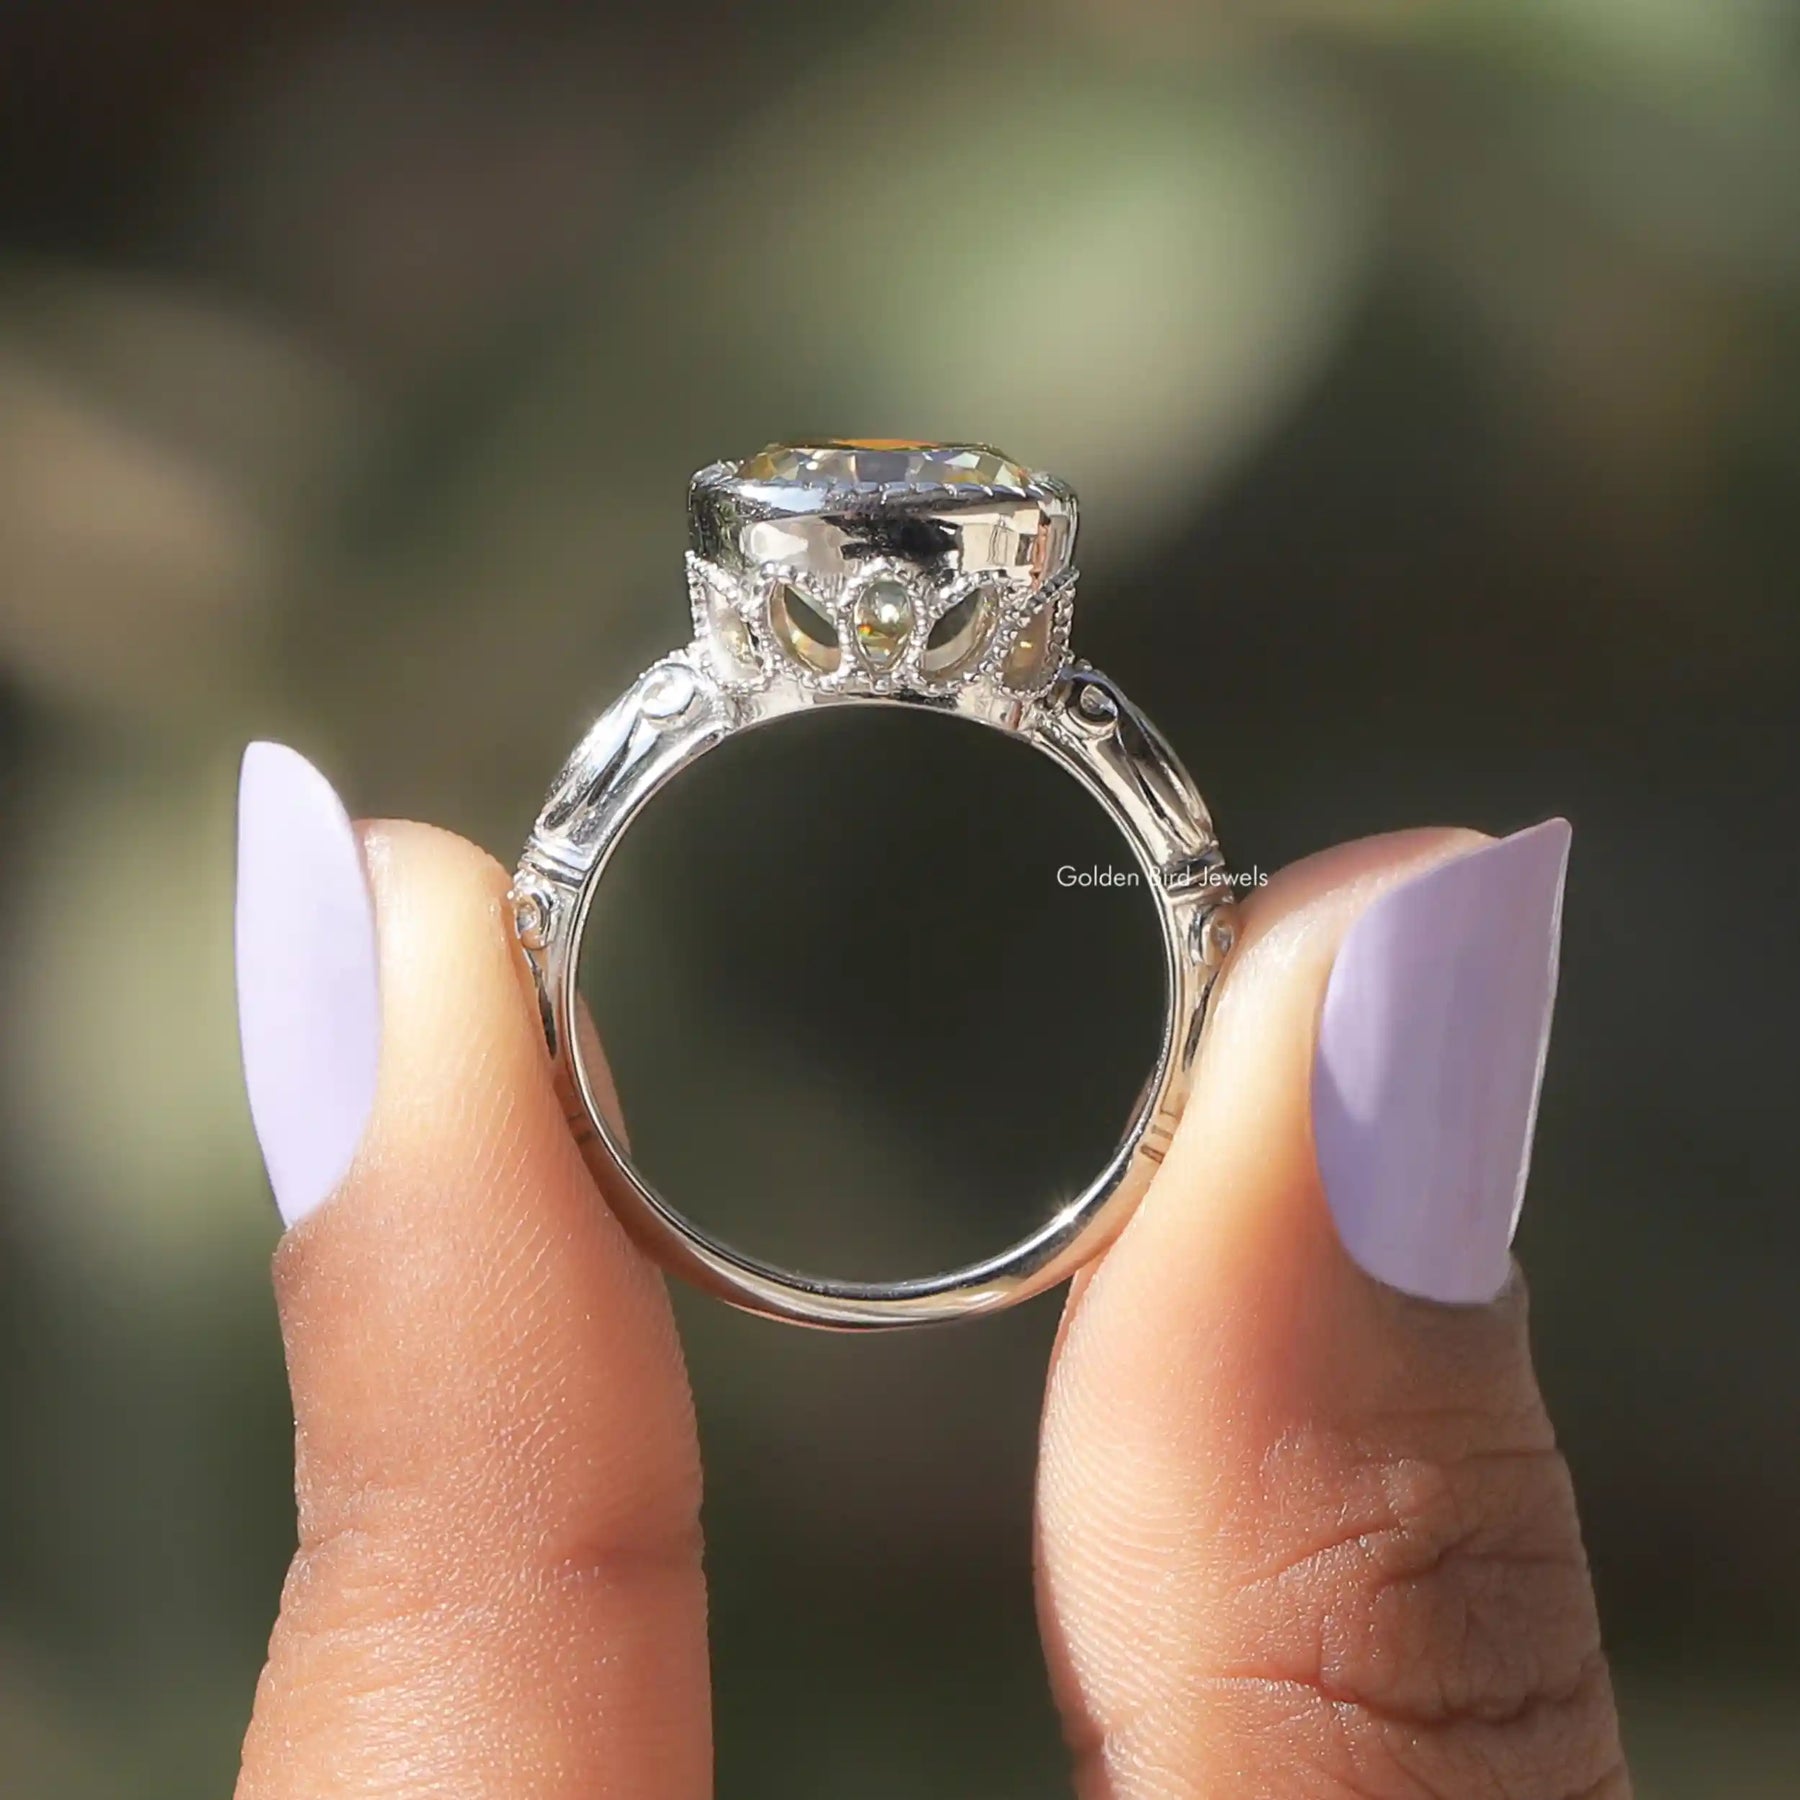 [Side view of cushion cut moissanite milgrain engagement ring made of 14k white gold]-[Golden Bird Jewels]